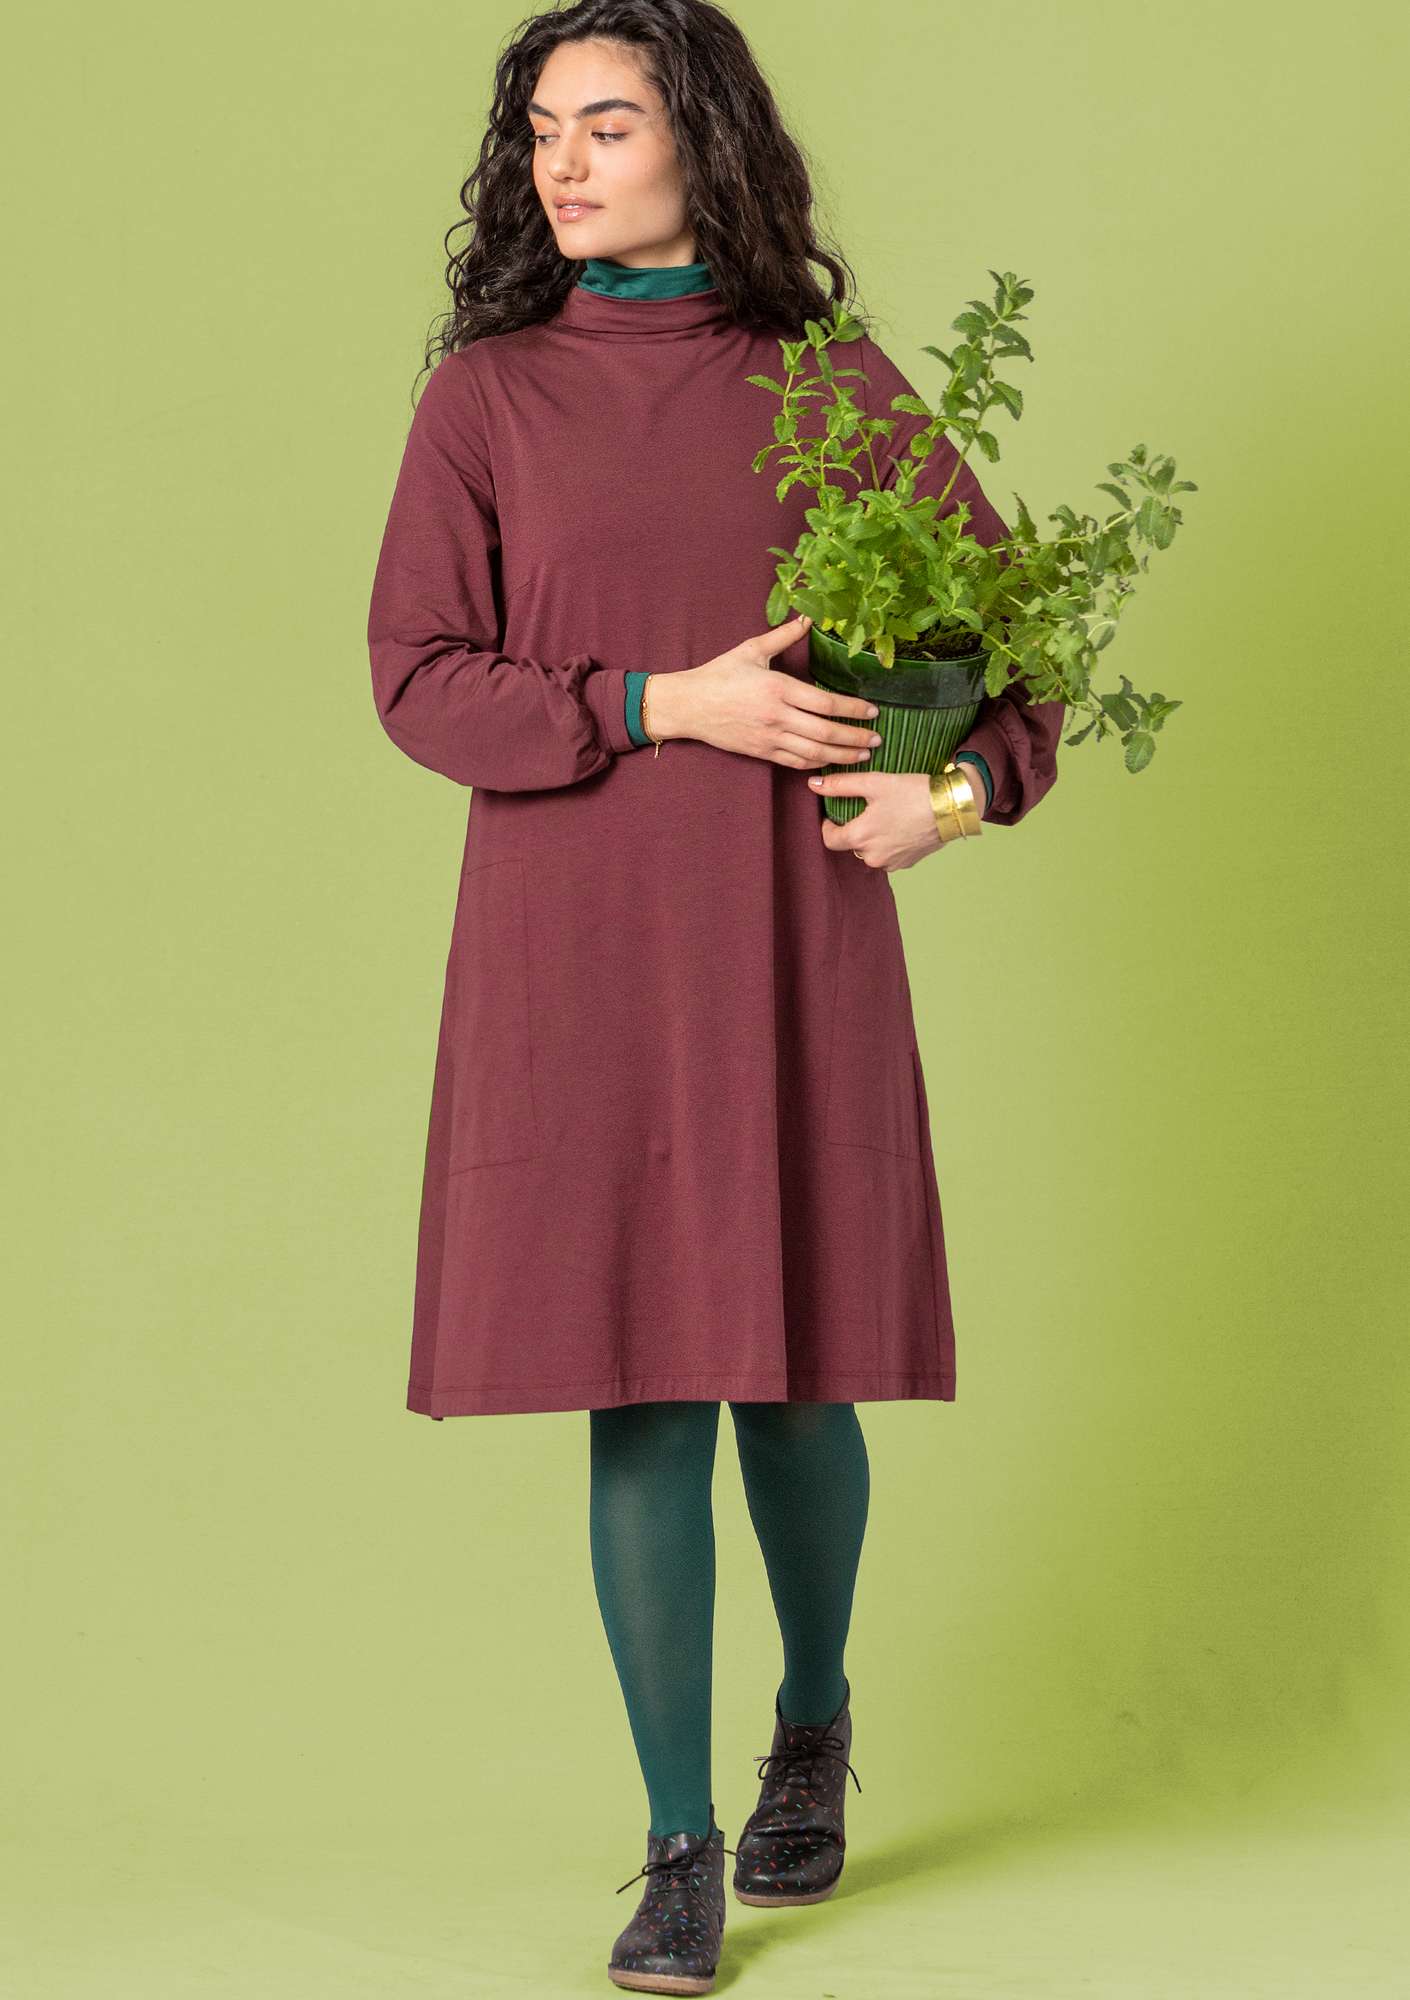 Robe en jersey « Bladmynta » en coton biologique/modal/élasthanne aubergine